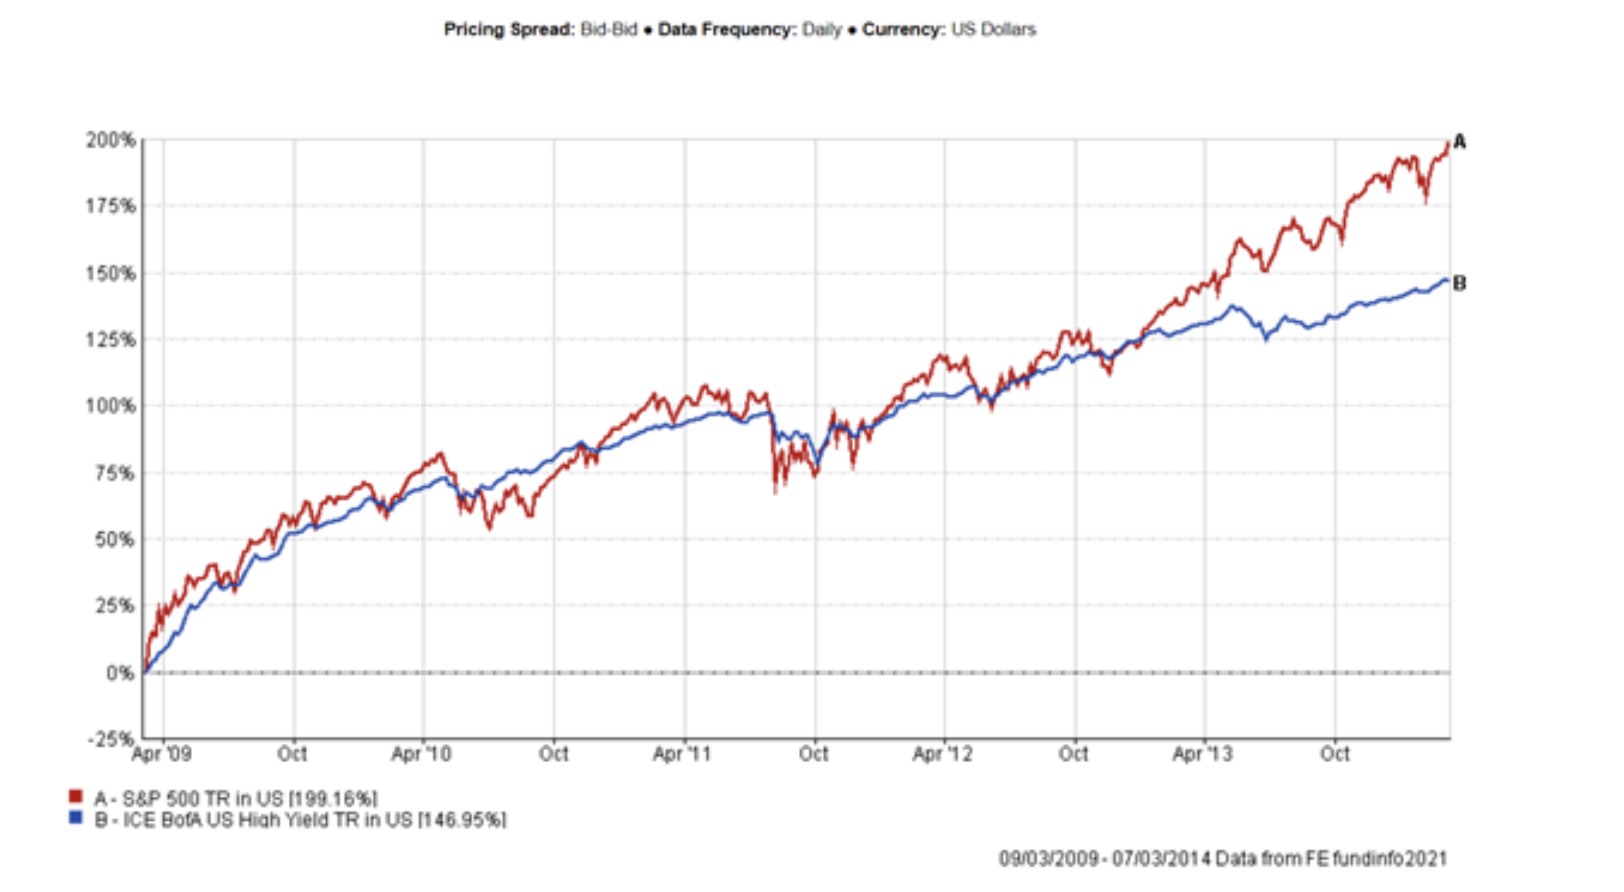 Performance of US asset classes after 2009 market bottom (Kepler May 14 2021)